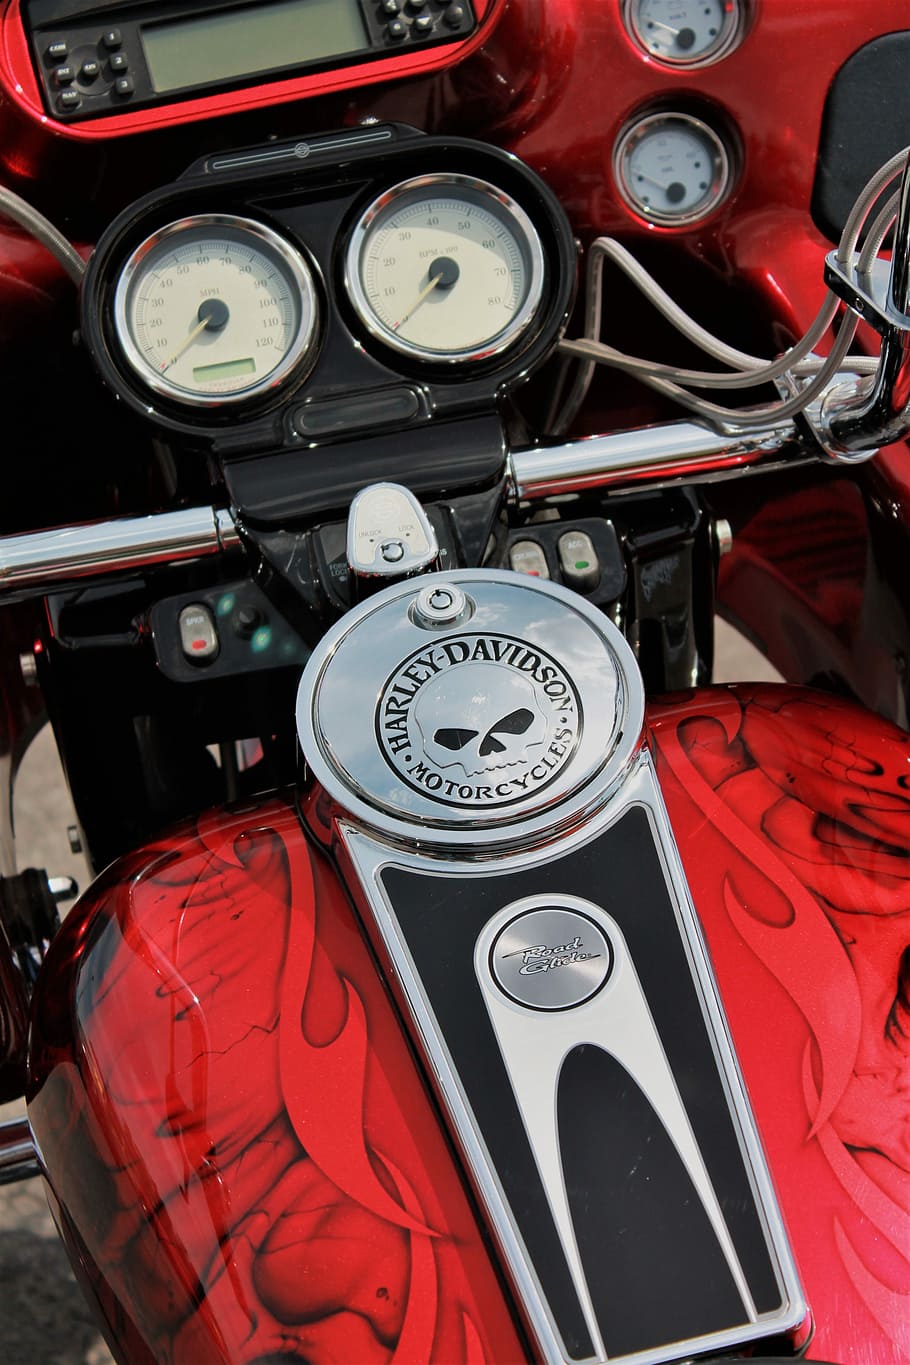 HD wallpaper: Harley Davidson, Motorcycle, red motorcycle, skull emblem,  bike | Wallpaper Flare